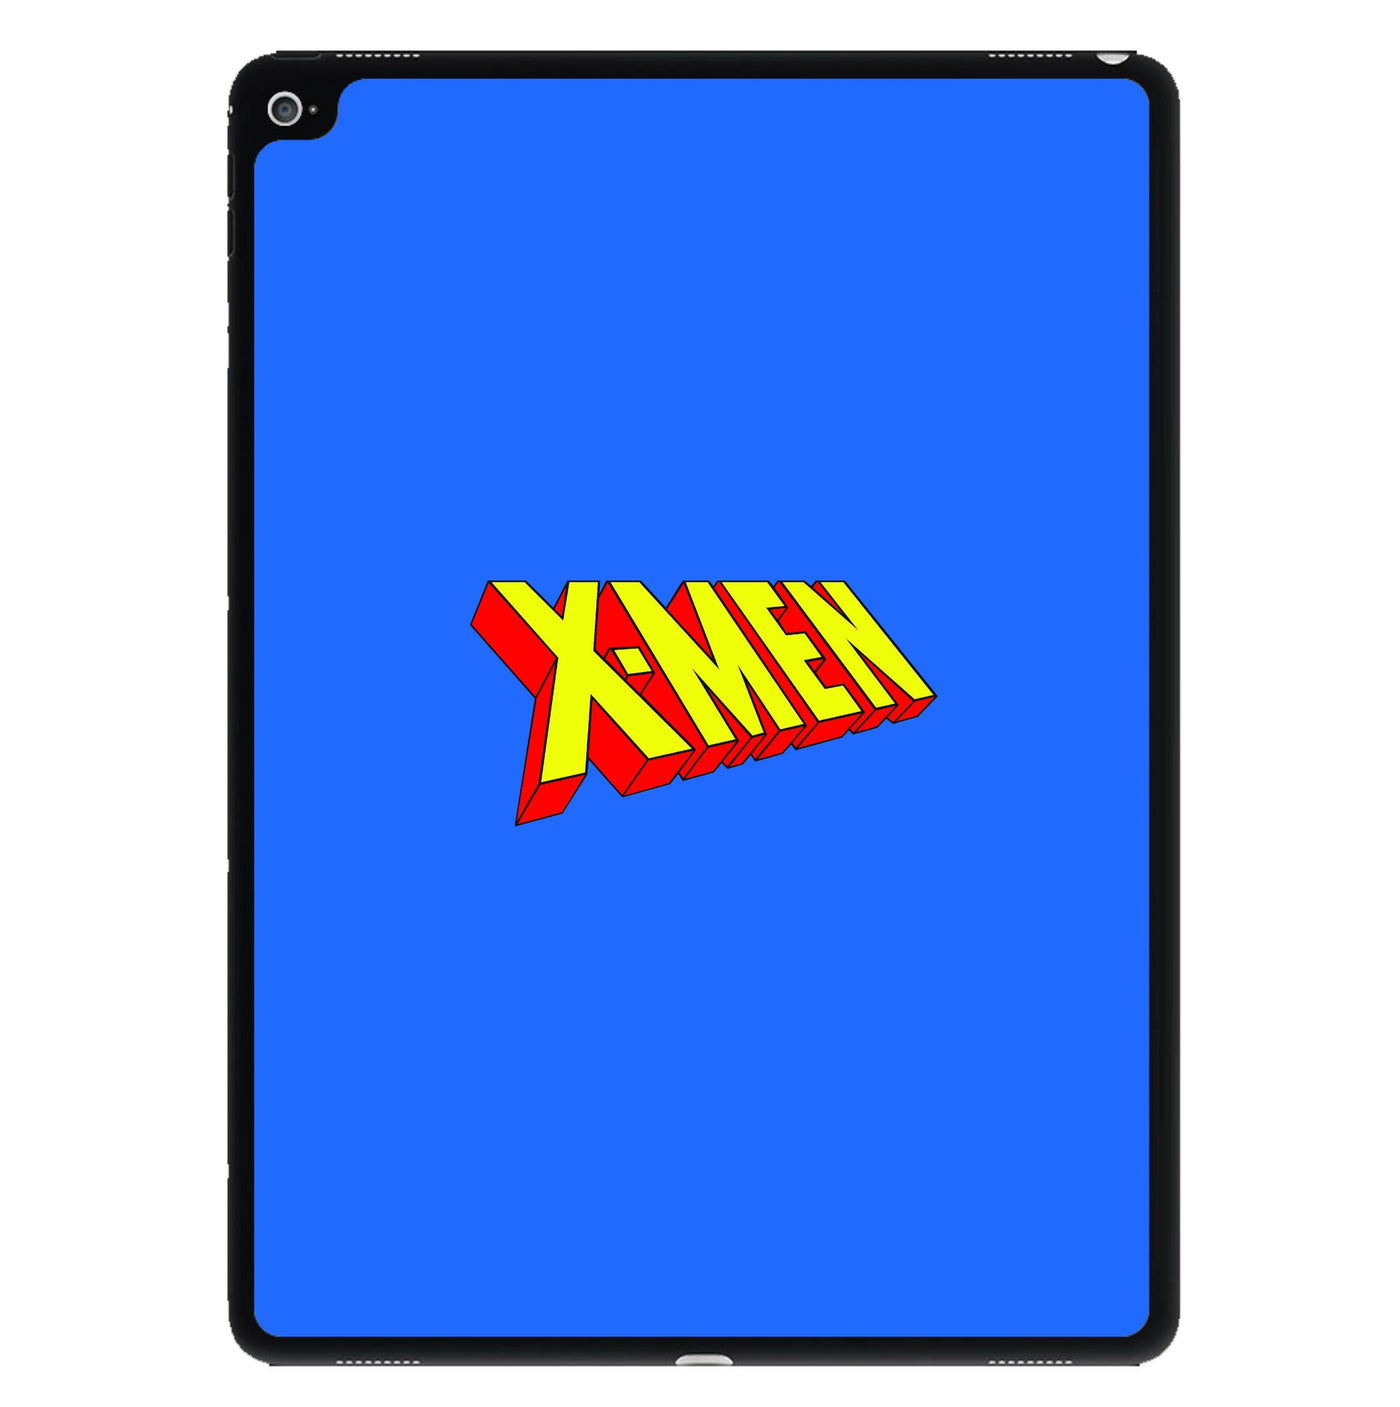 3D Logo - X-Men iPad Case